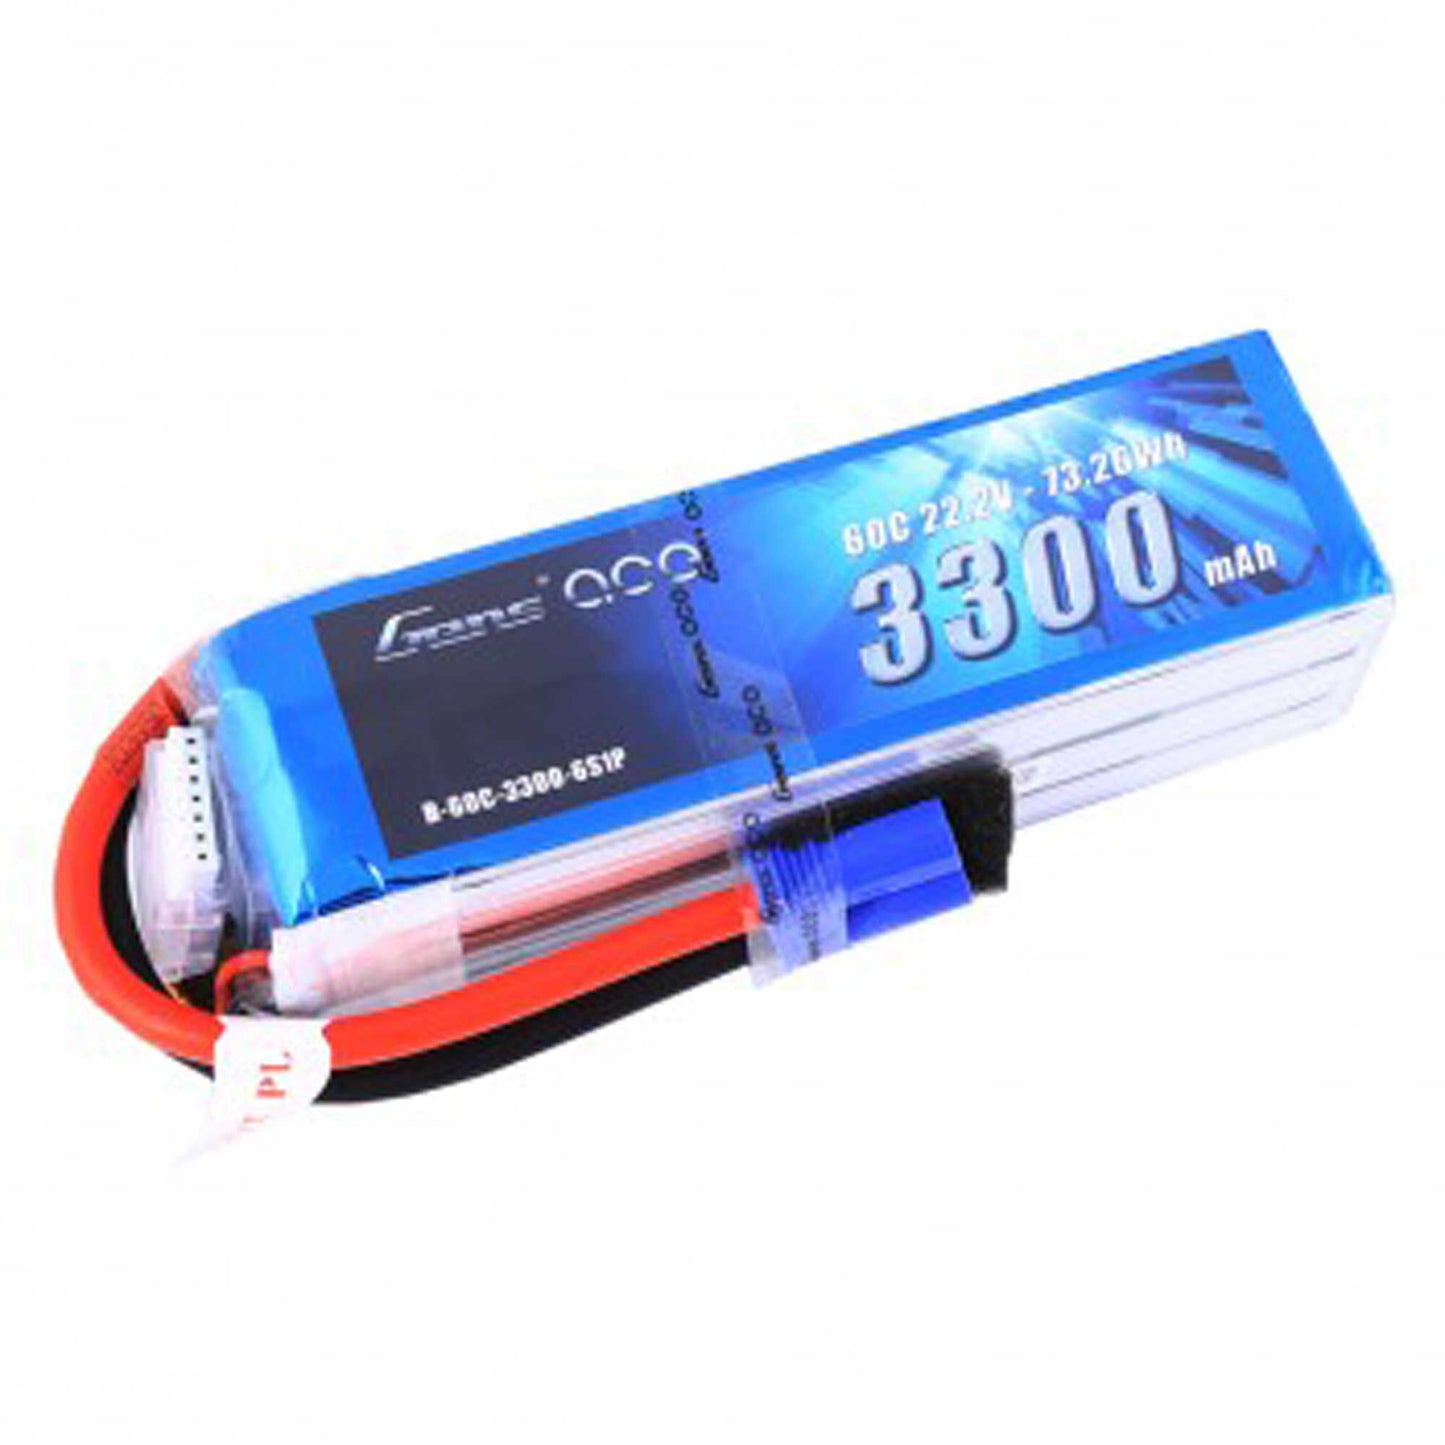 3300mAh 22.2V 60C 6S1P Lipo Battery Pack with EC5